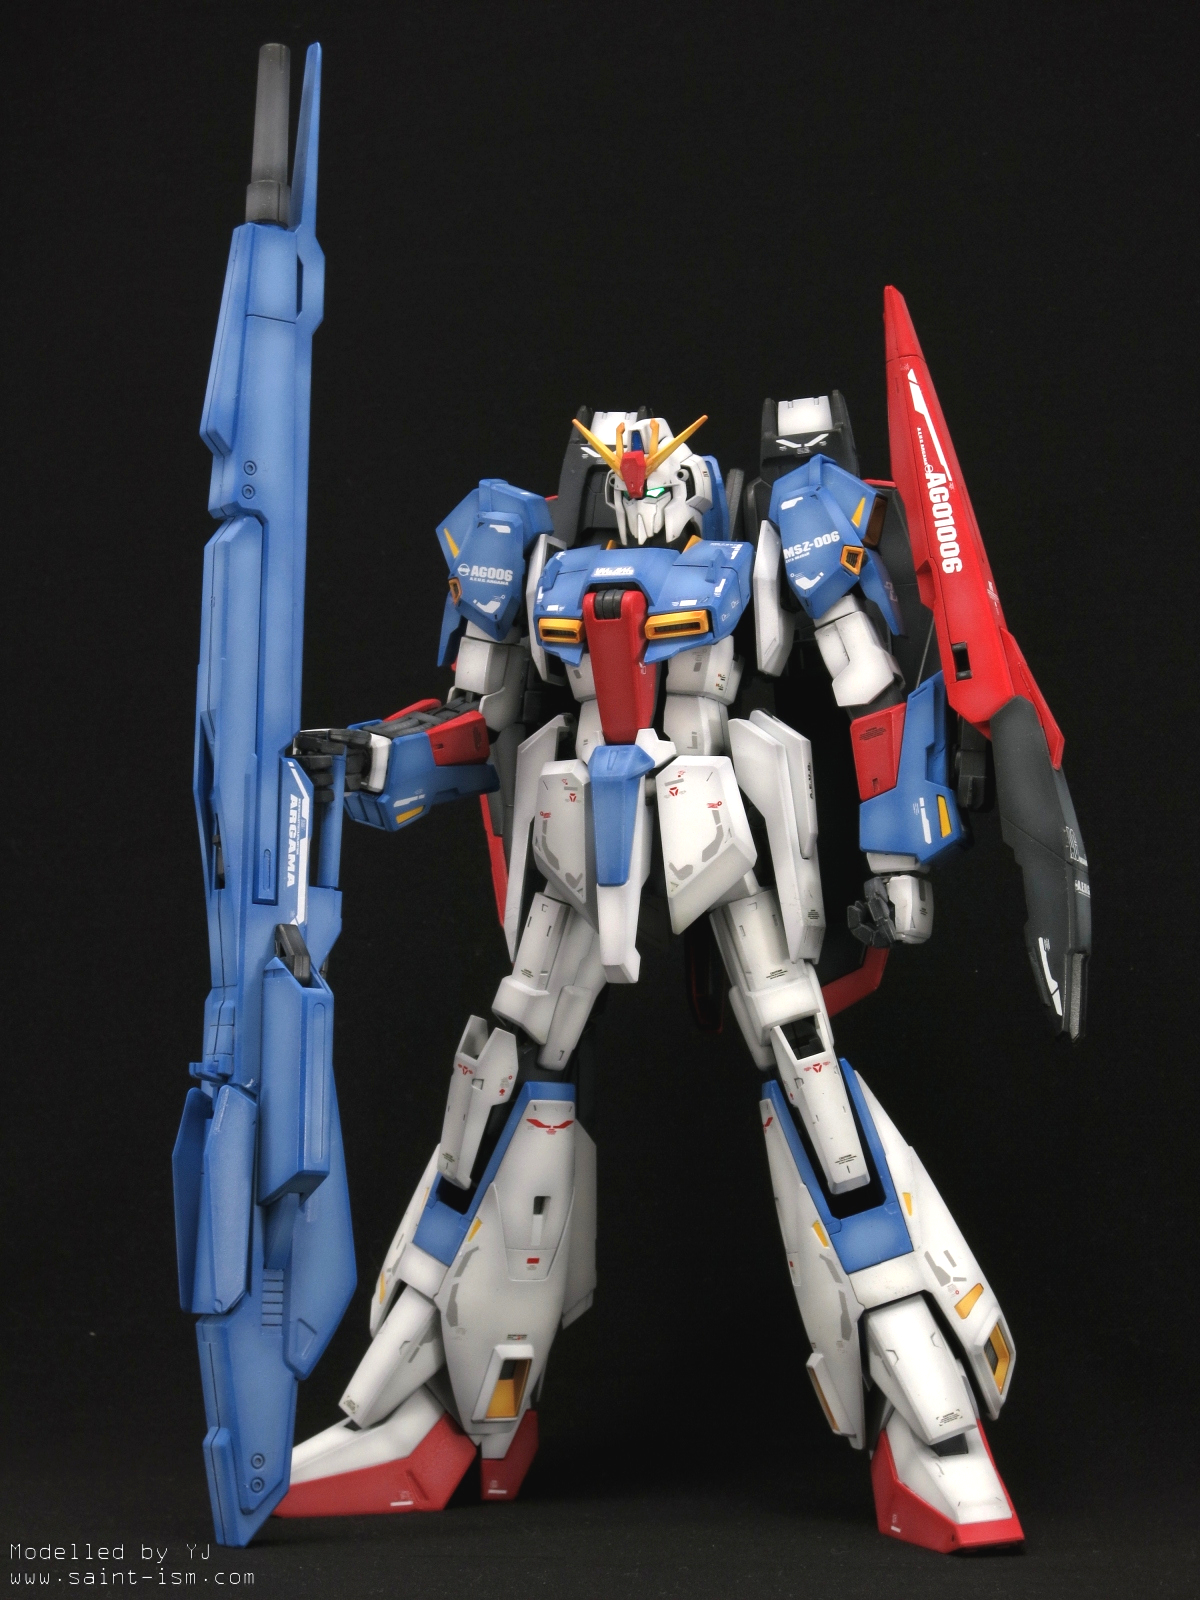 Super Detail Up 1/100 MG Gundam Z MSZ-006 ZETA Ver.2 2.0 Decal Model Kit 5653 